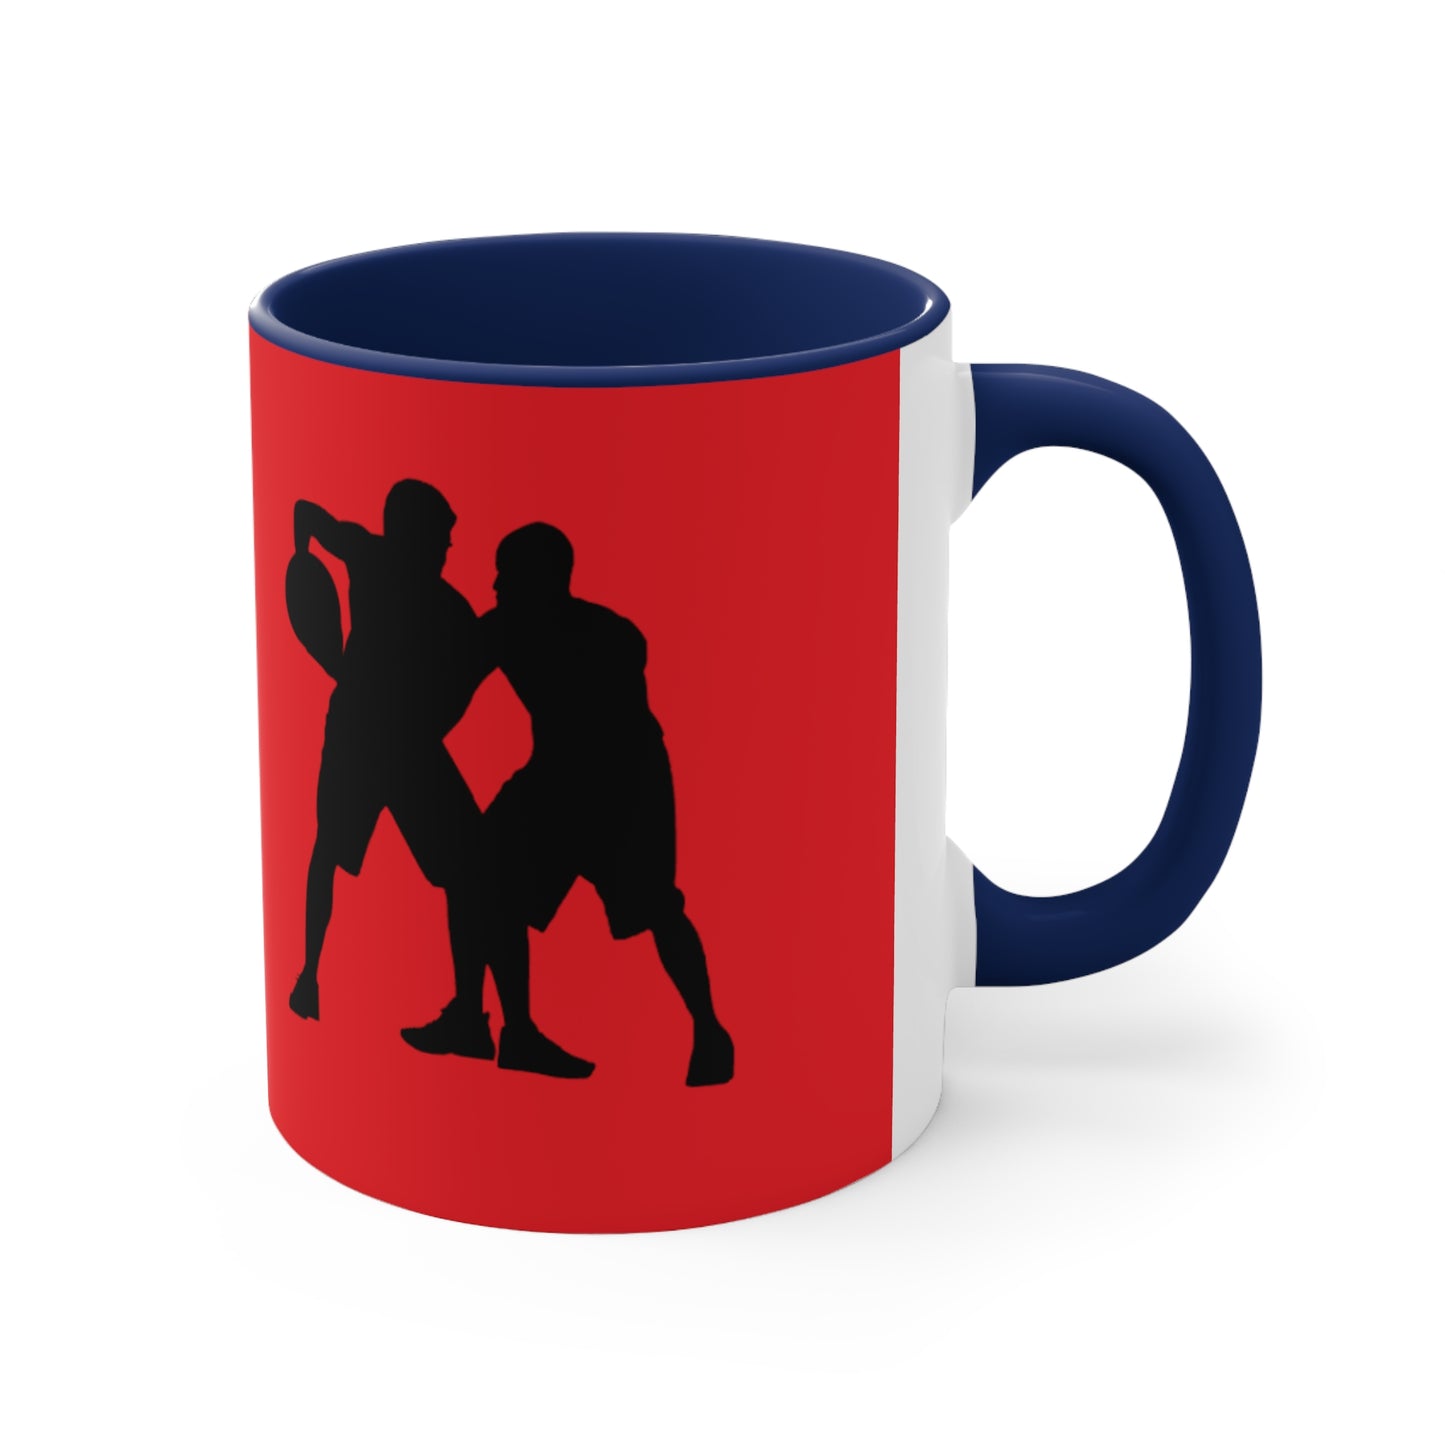 Accent Coffee Mug, 11oz: Basketball Red